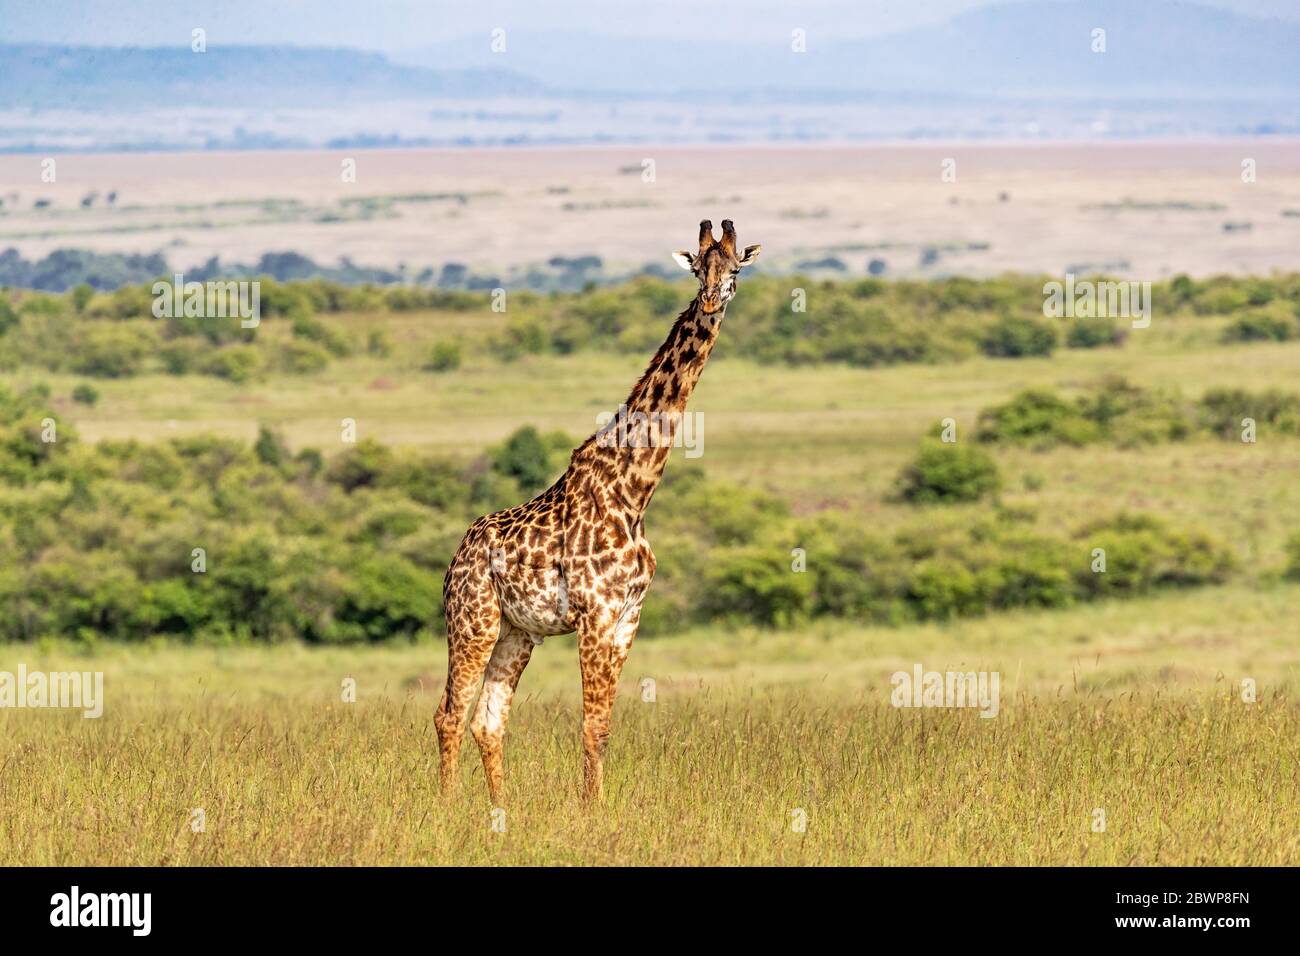 Beautiful Masai giraffe standing in grasslands of Kenya, Africa Stock Photo